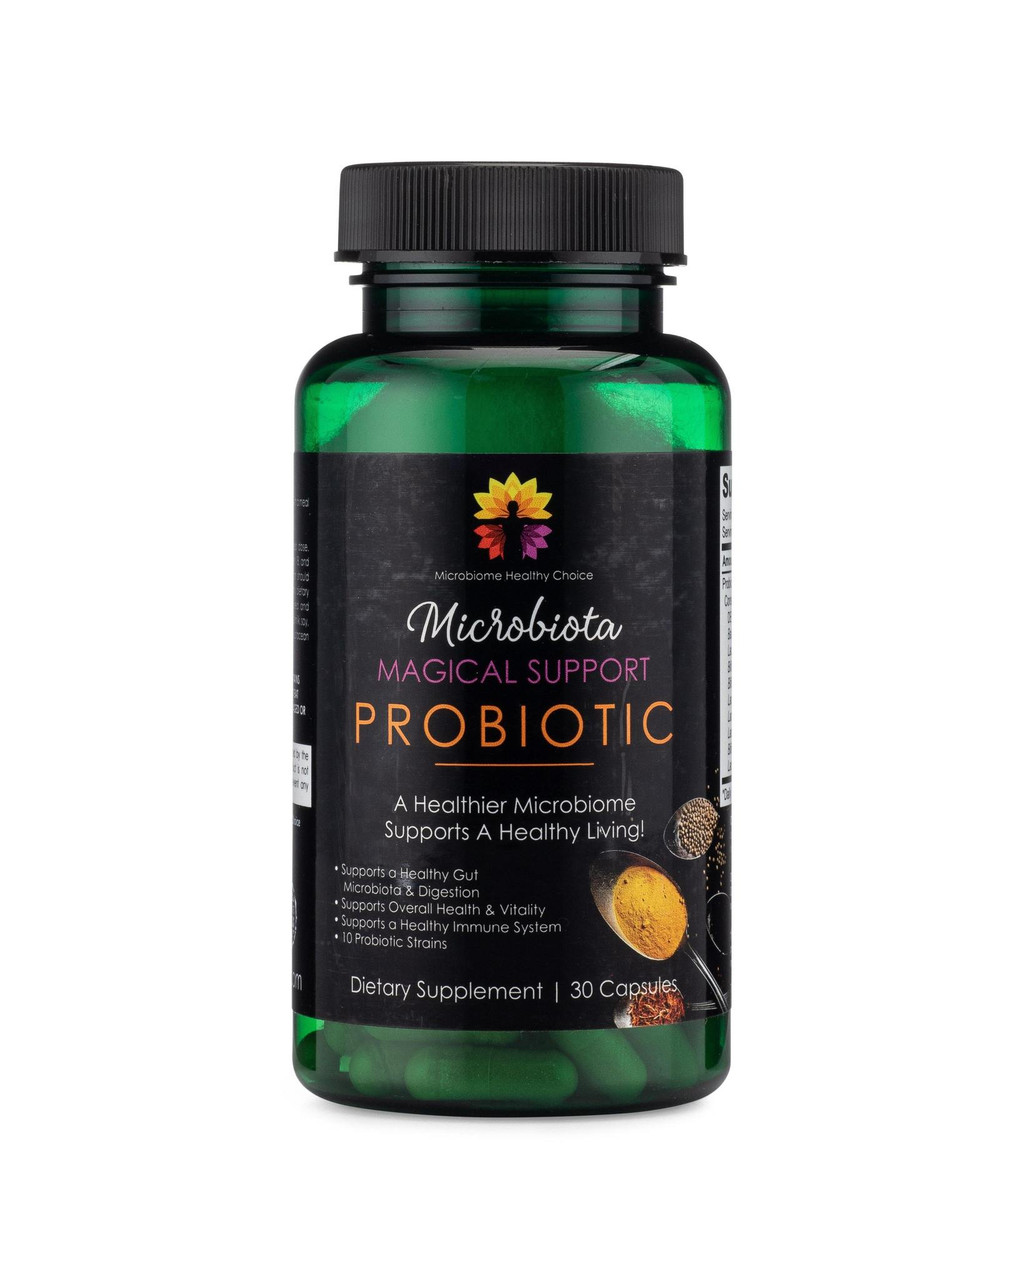 Microbiota Magical Support Probiotic